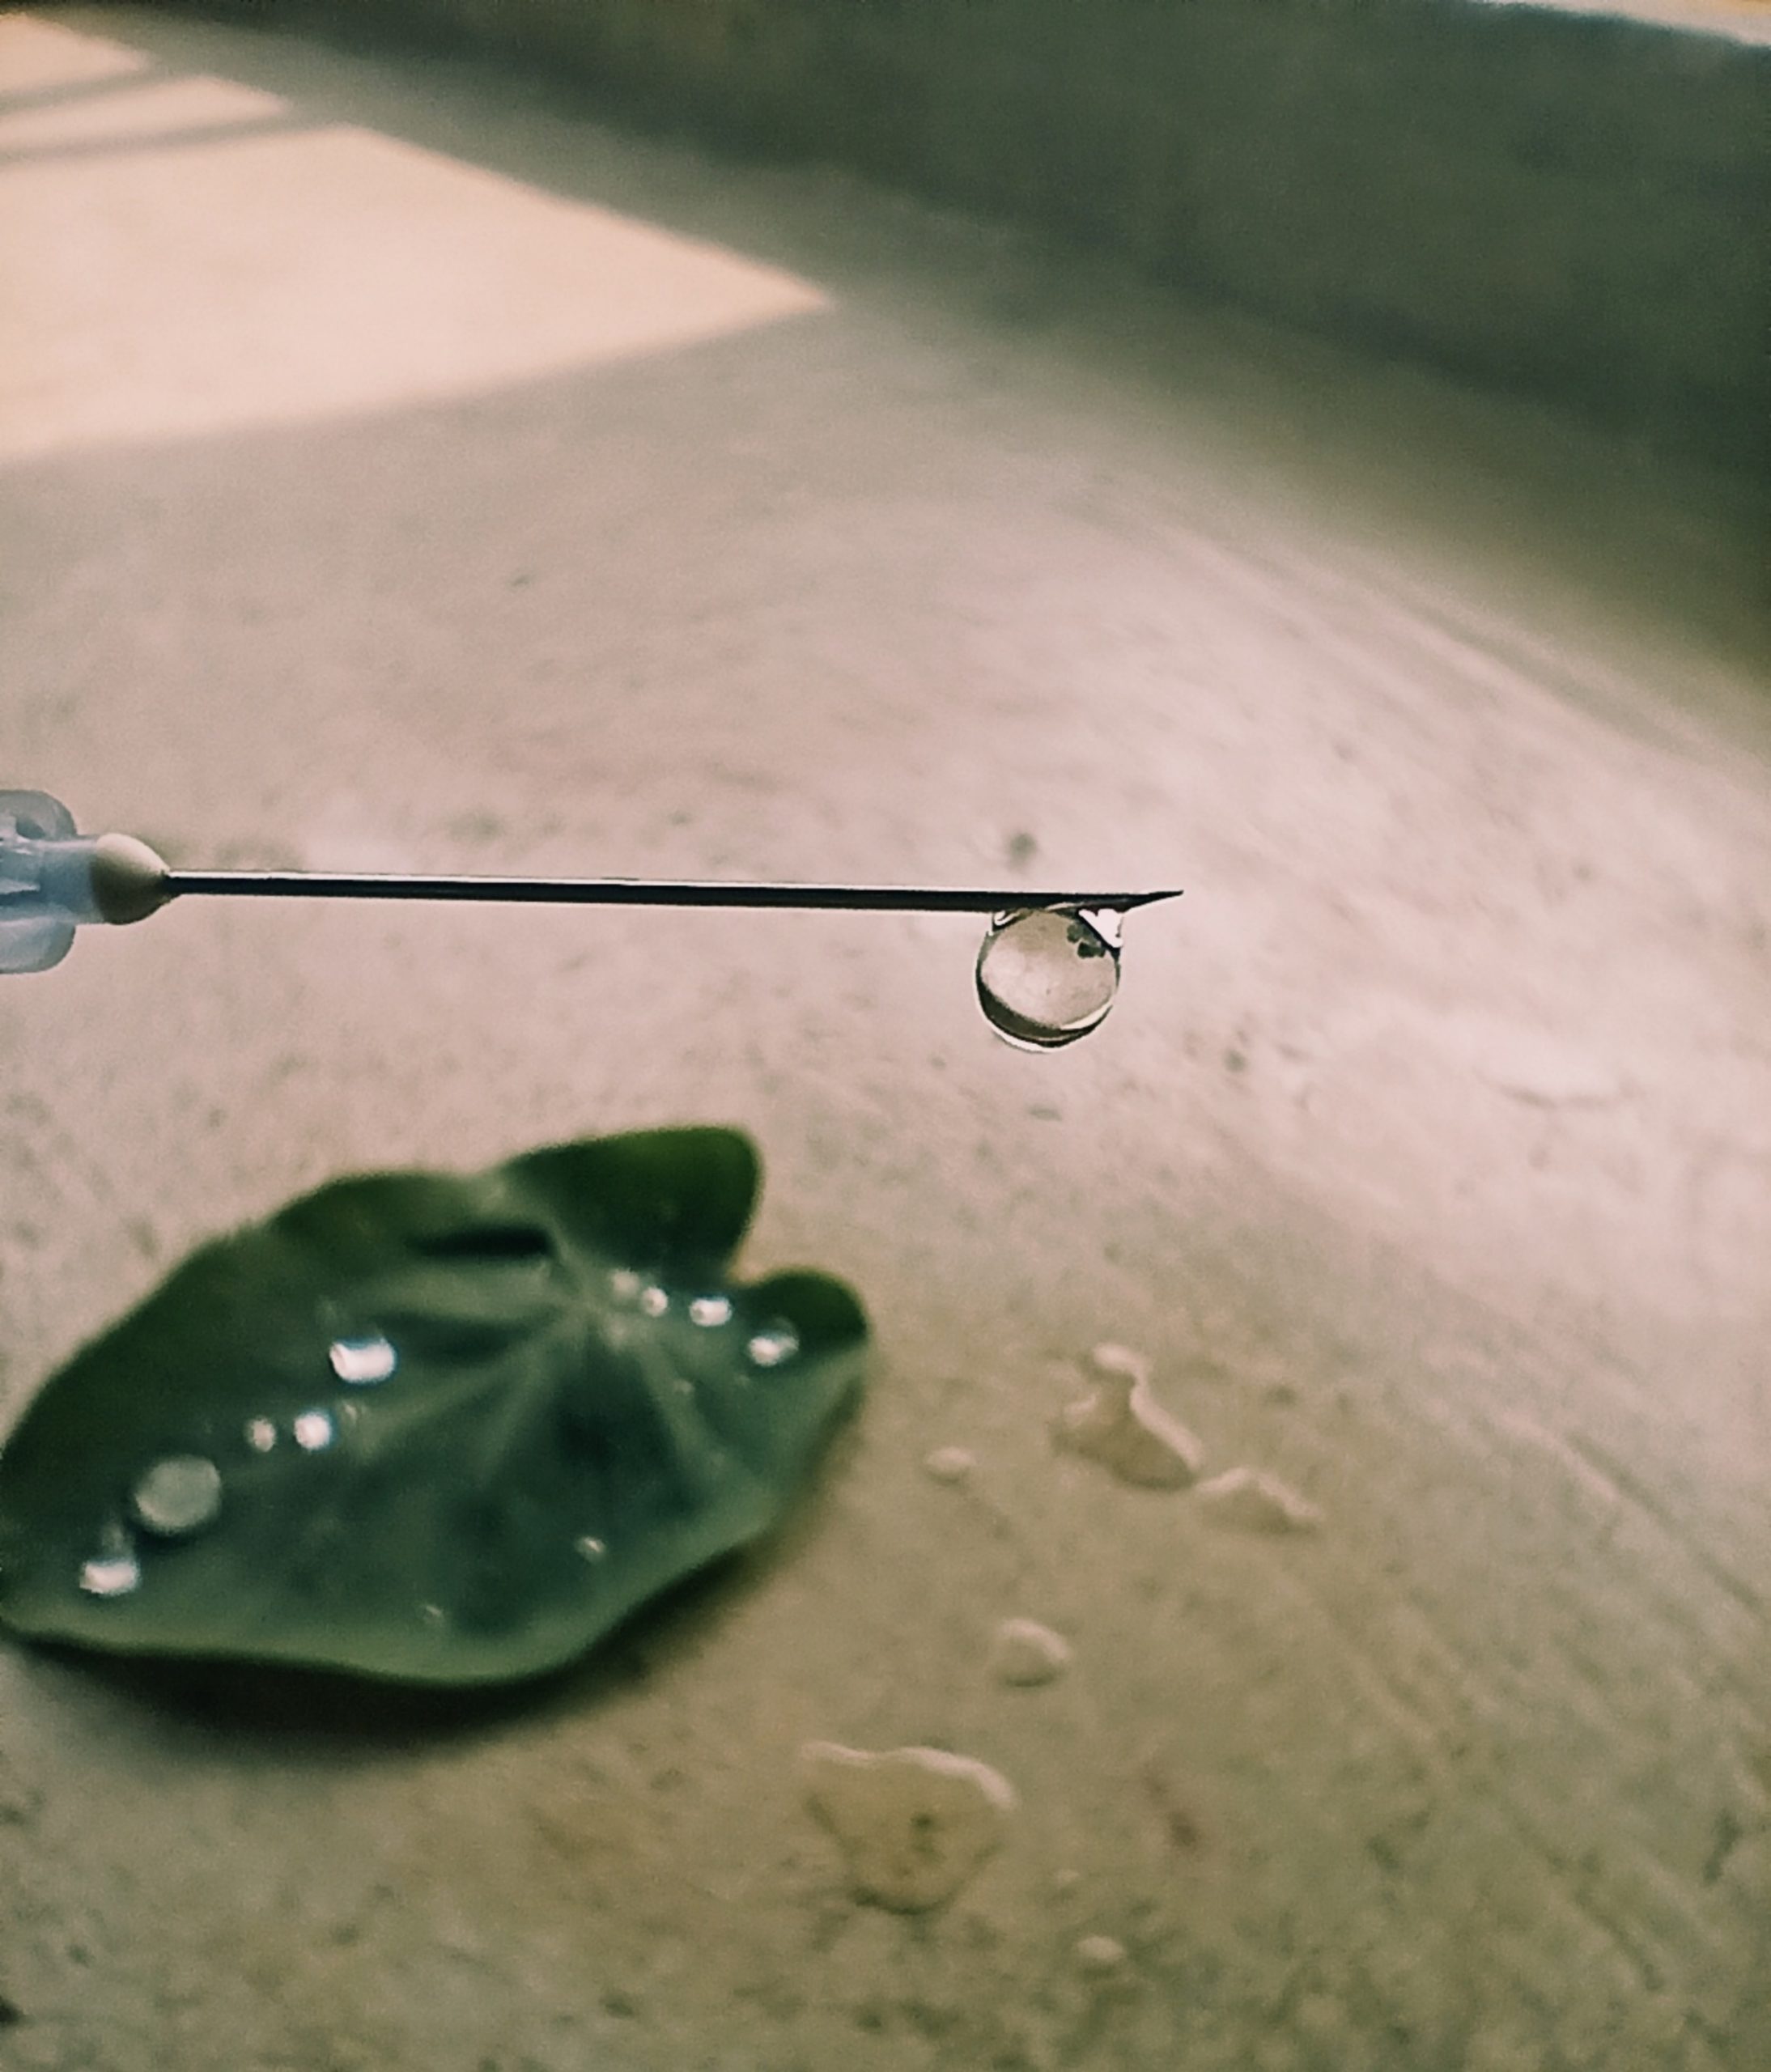 Water drop on syringe